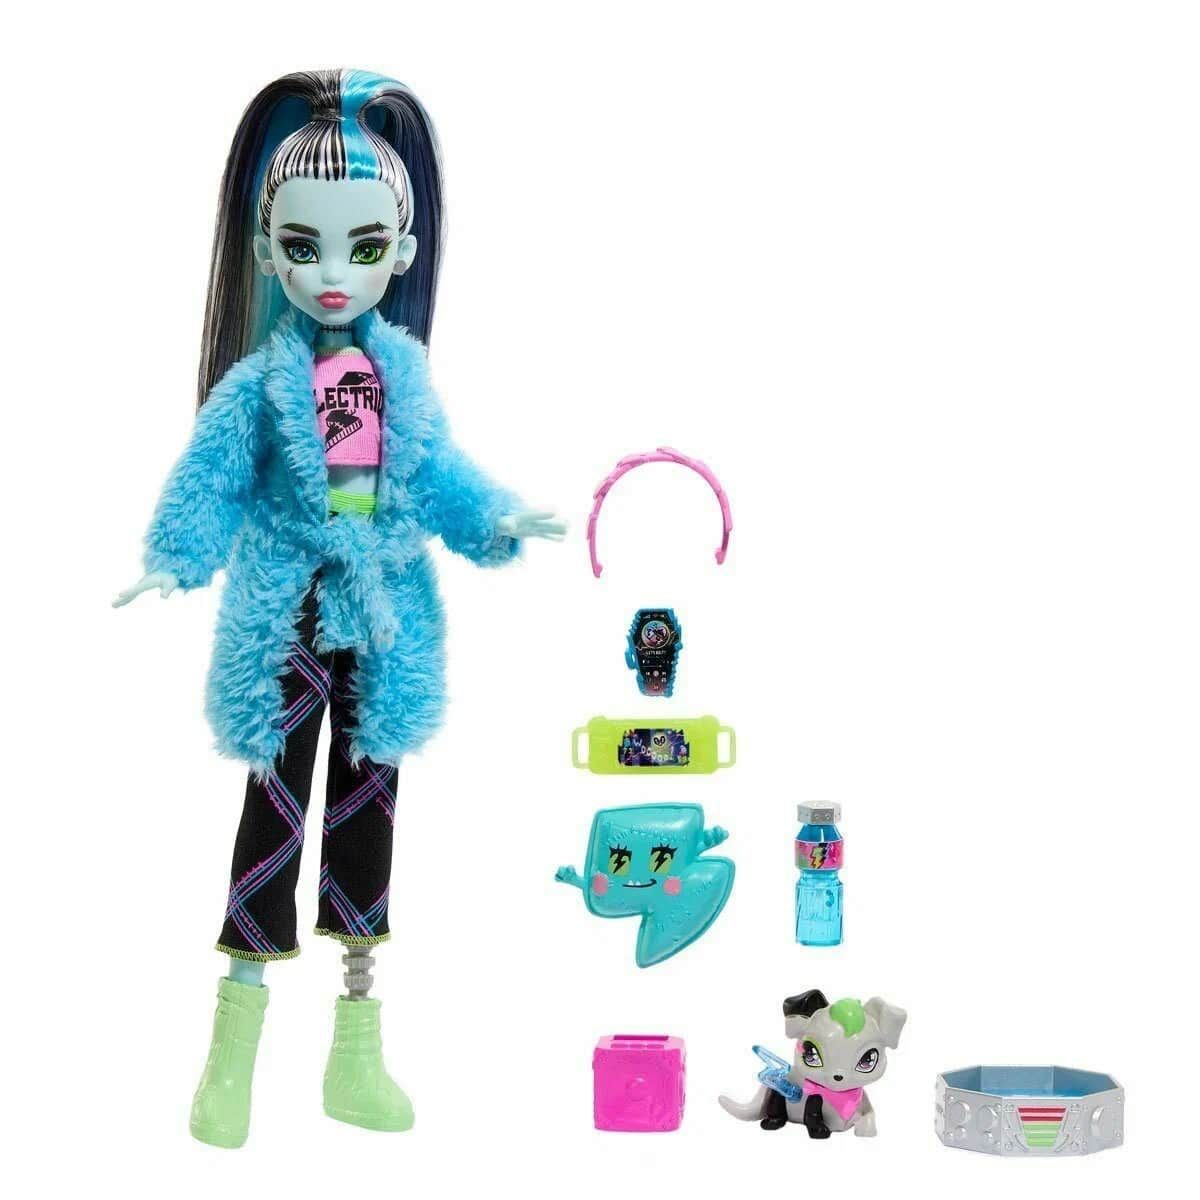 Кукла Monster High Френки Штейн Пижамная вечеринка, HKY68 кукла monster high френки штейн пижамная вечеринка hky68